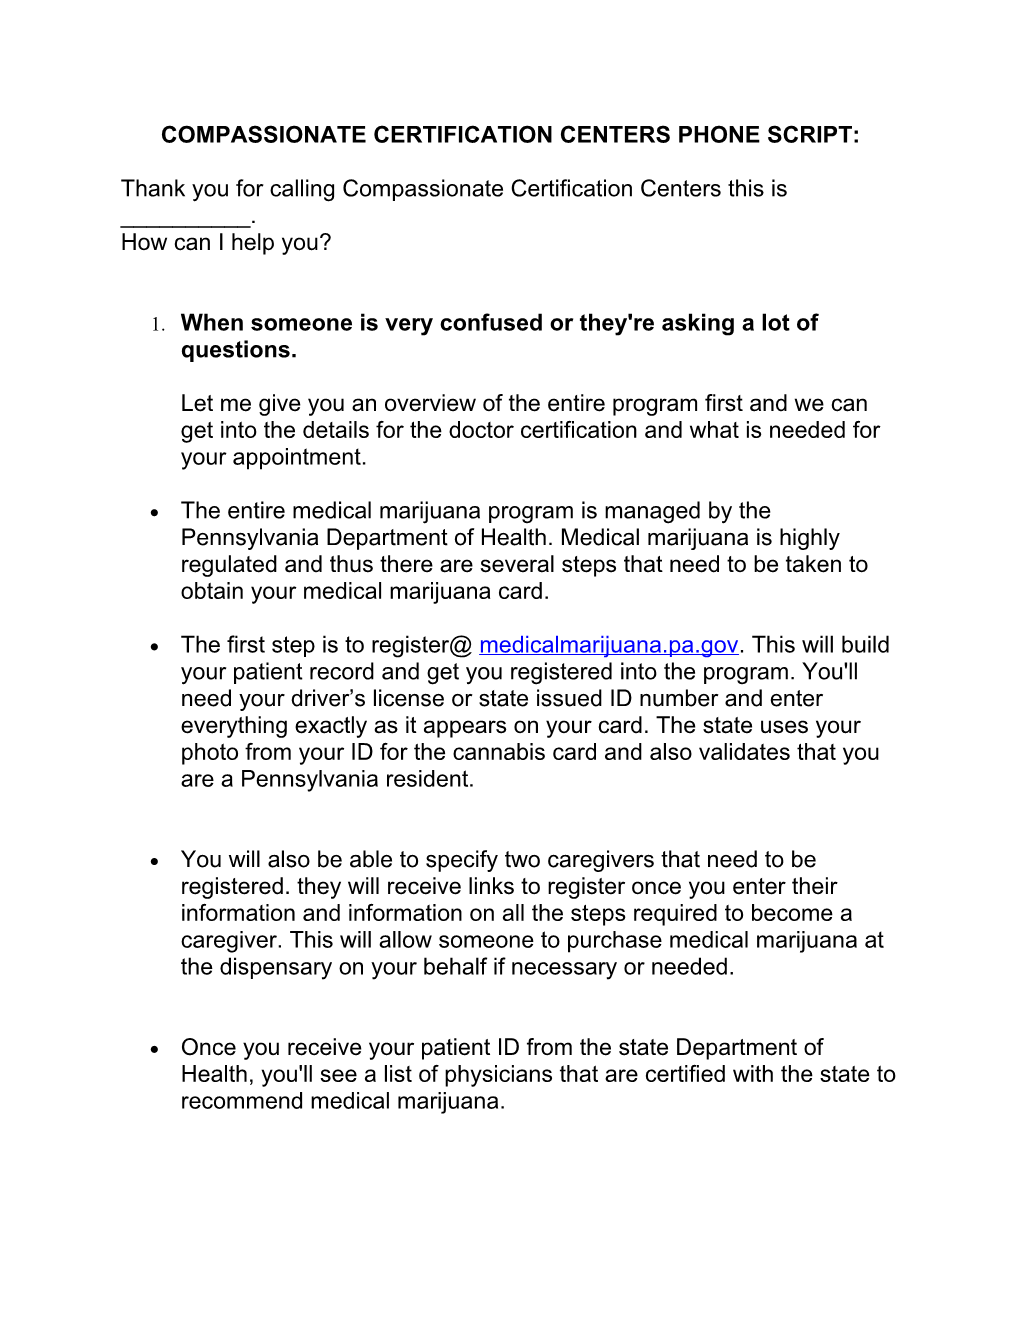 Compassionate Certification Centers Phone Script